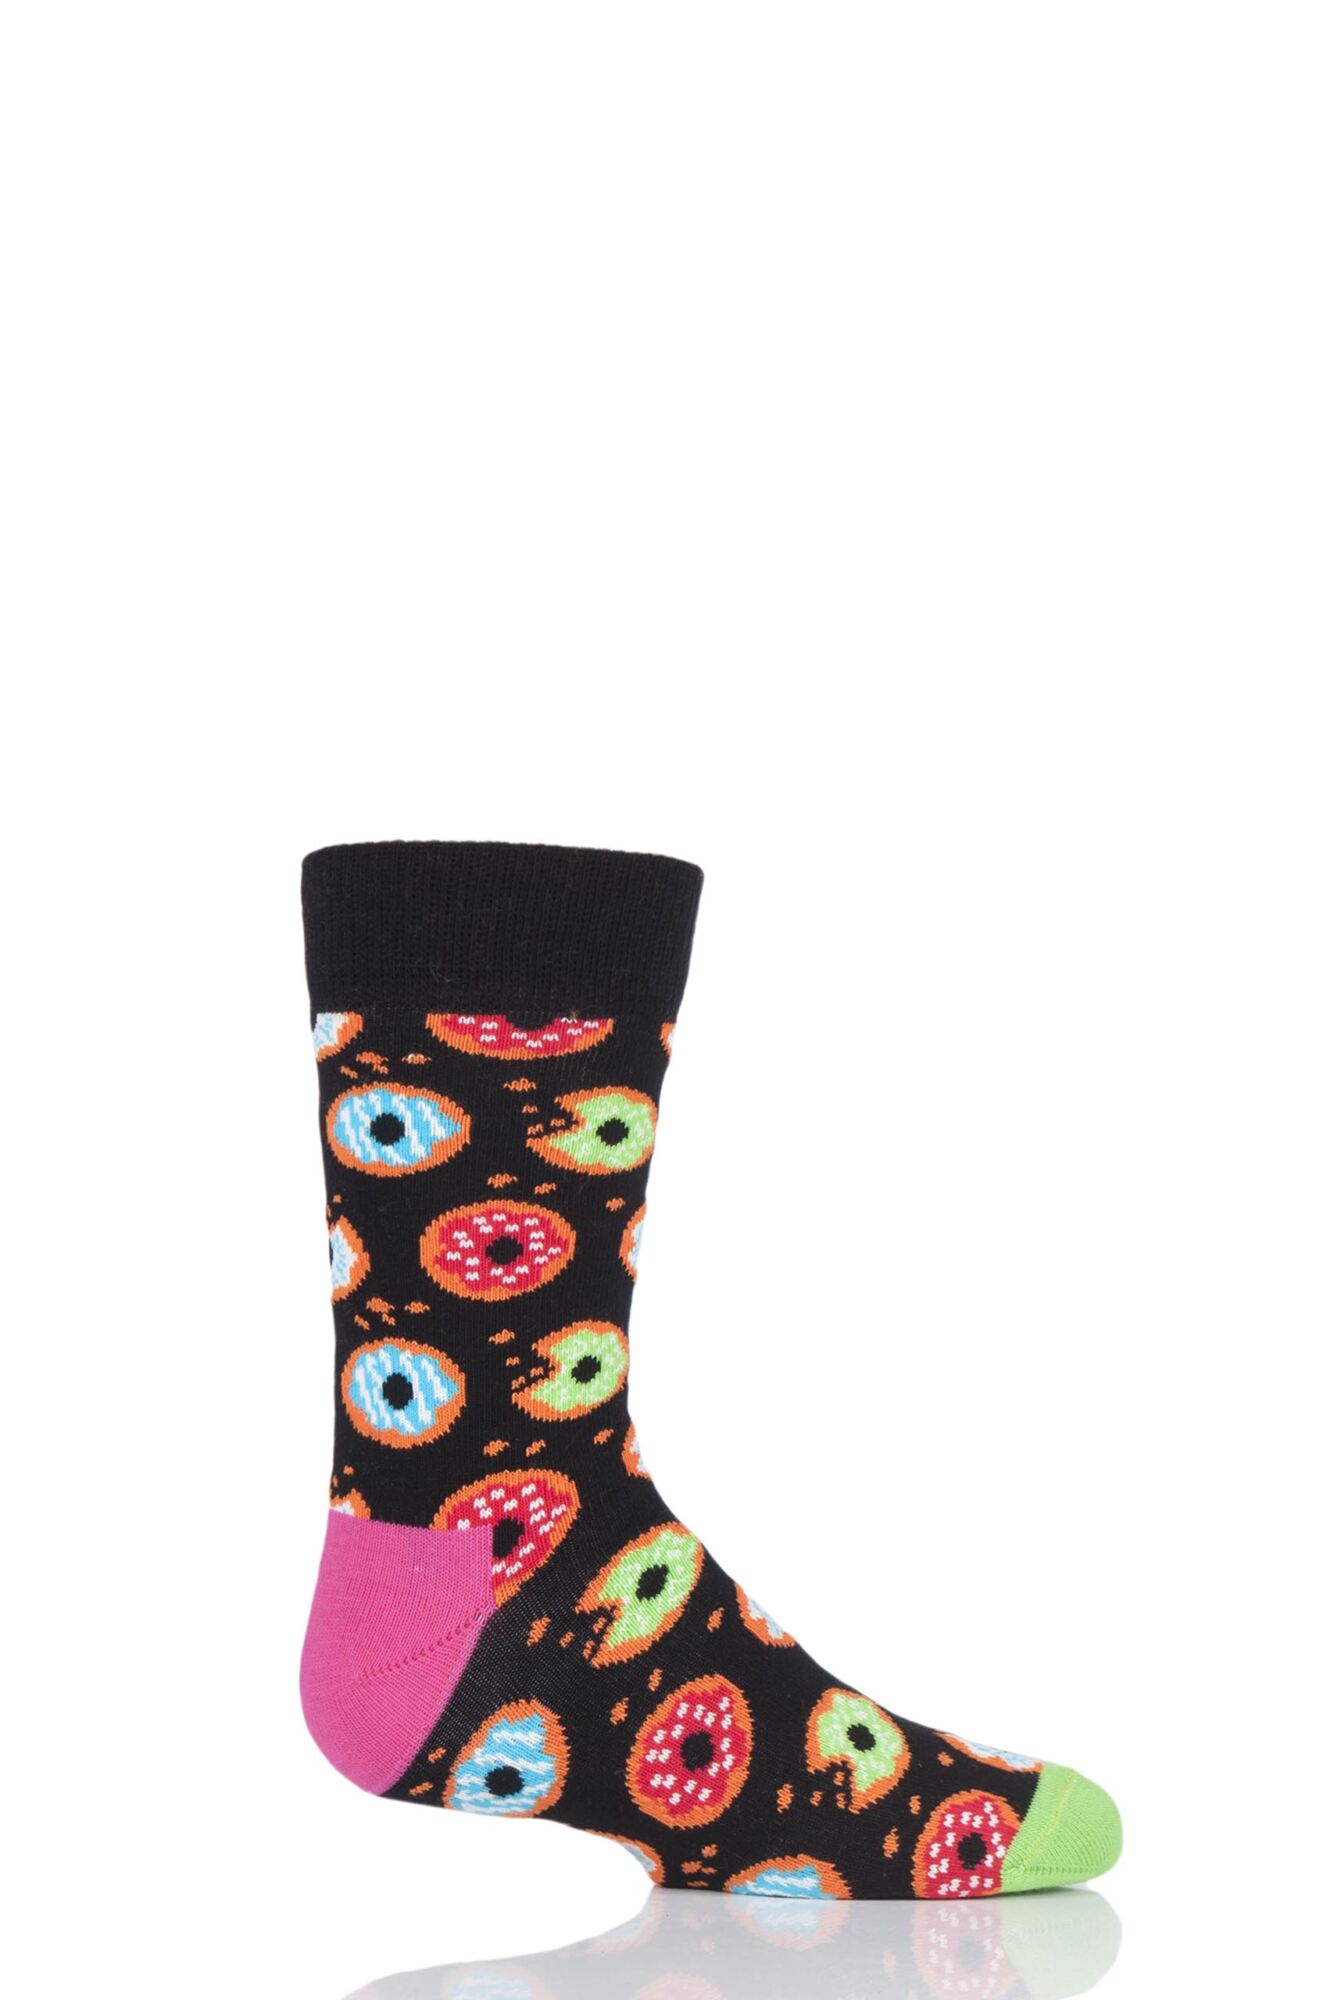 1 Pair Doughnut Cotton Socks Kids Unisex - Happy Socks